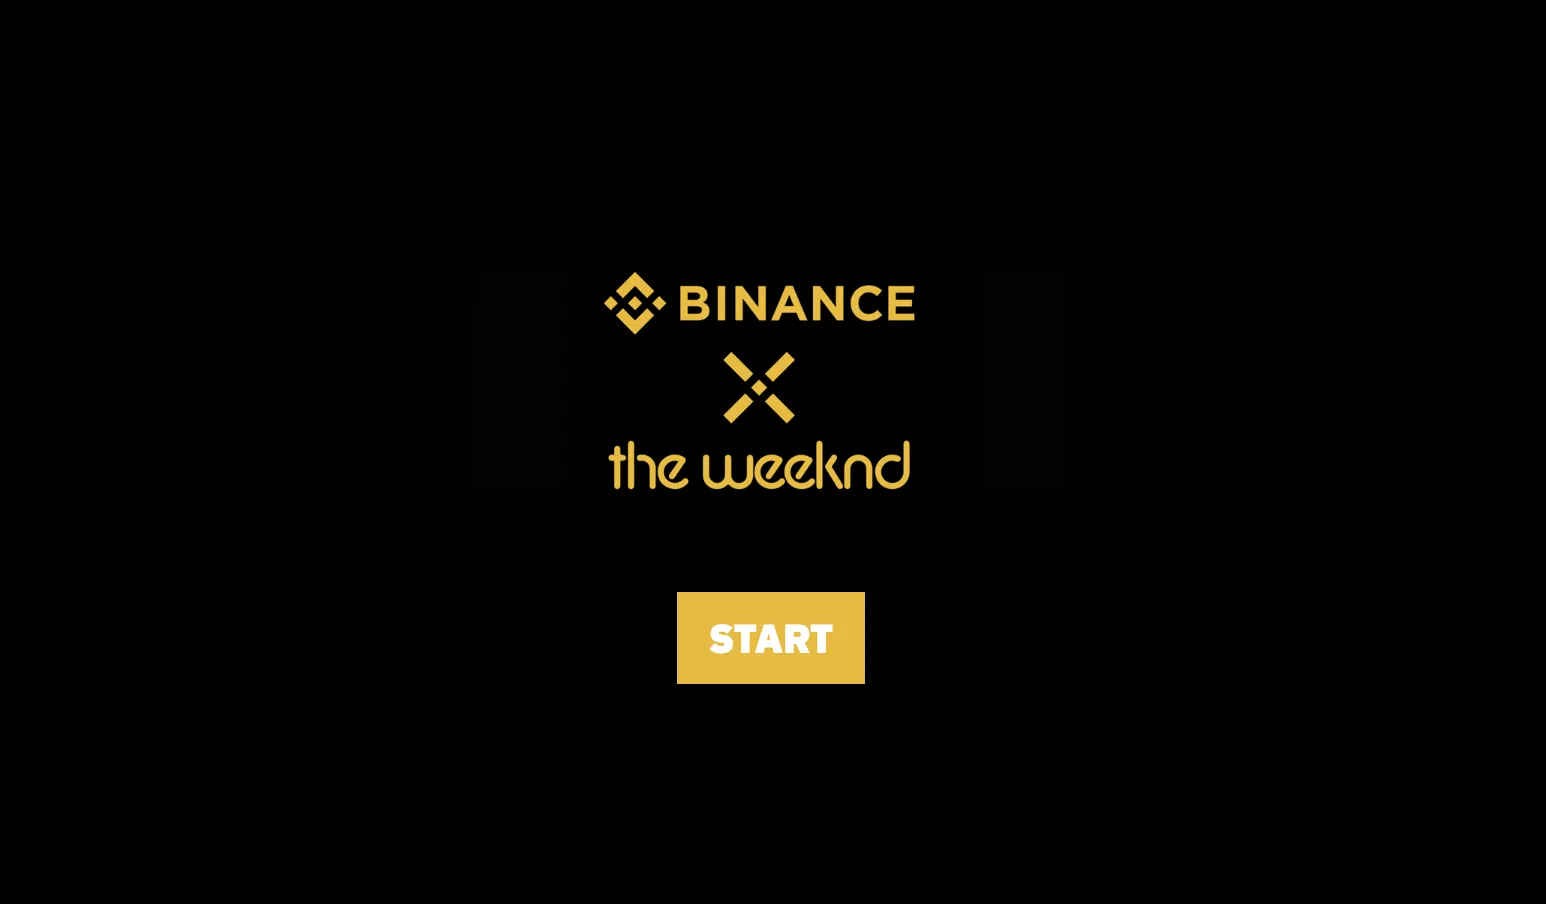 A screenshot of the Binance x the Weeknd landing page.